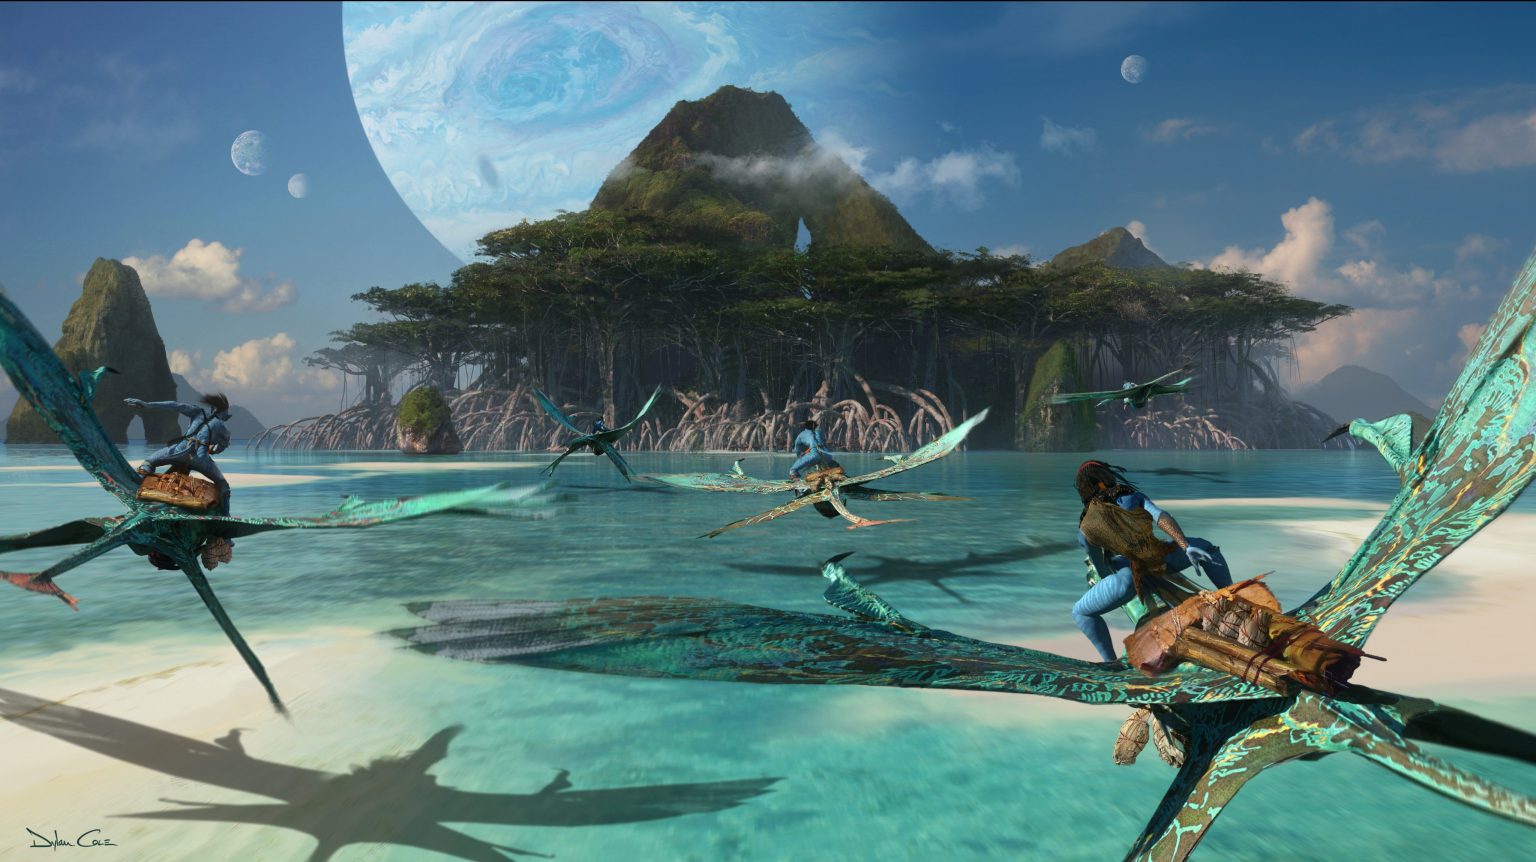 Underwater Avatar 2 Set Photos High Tech Advancements